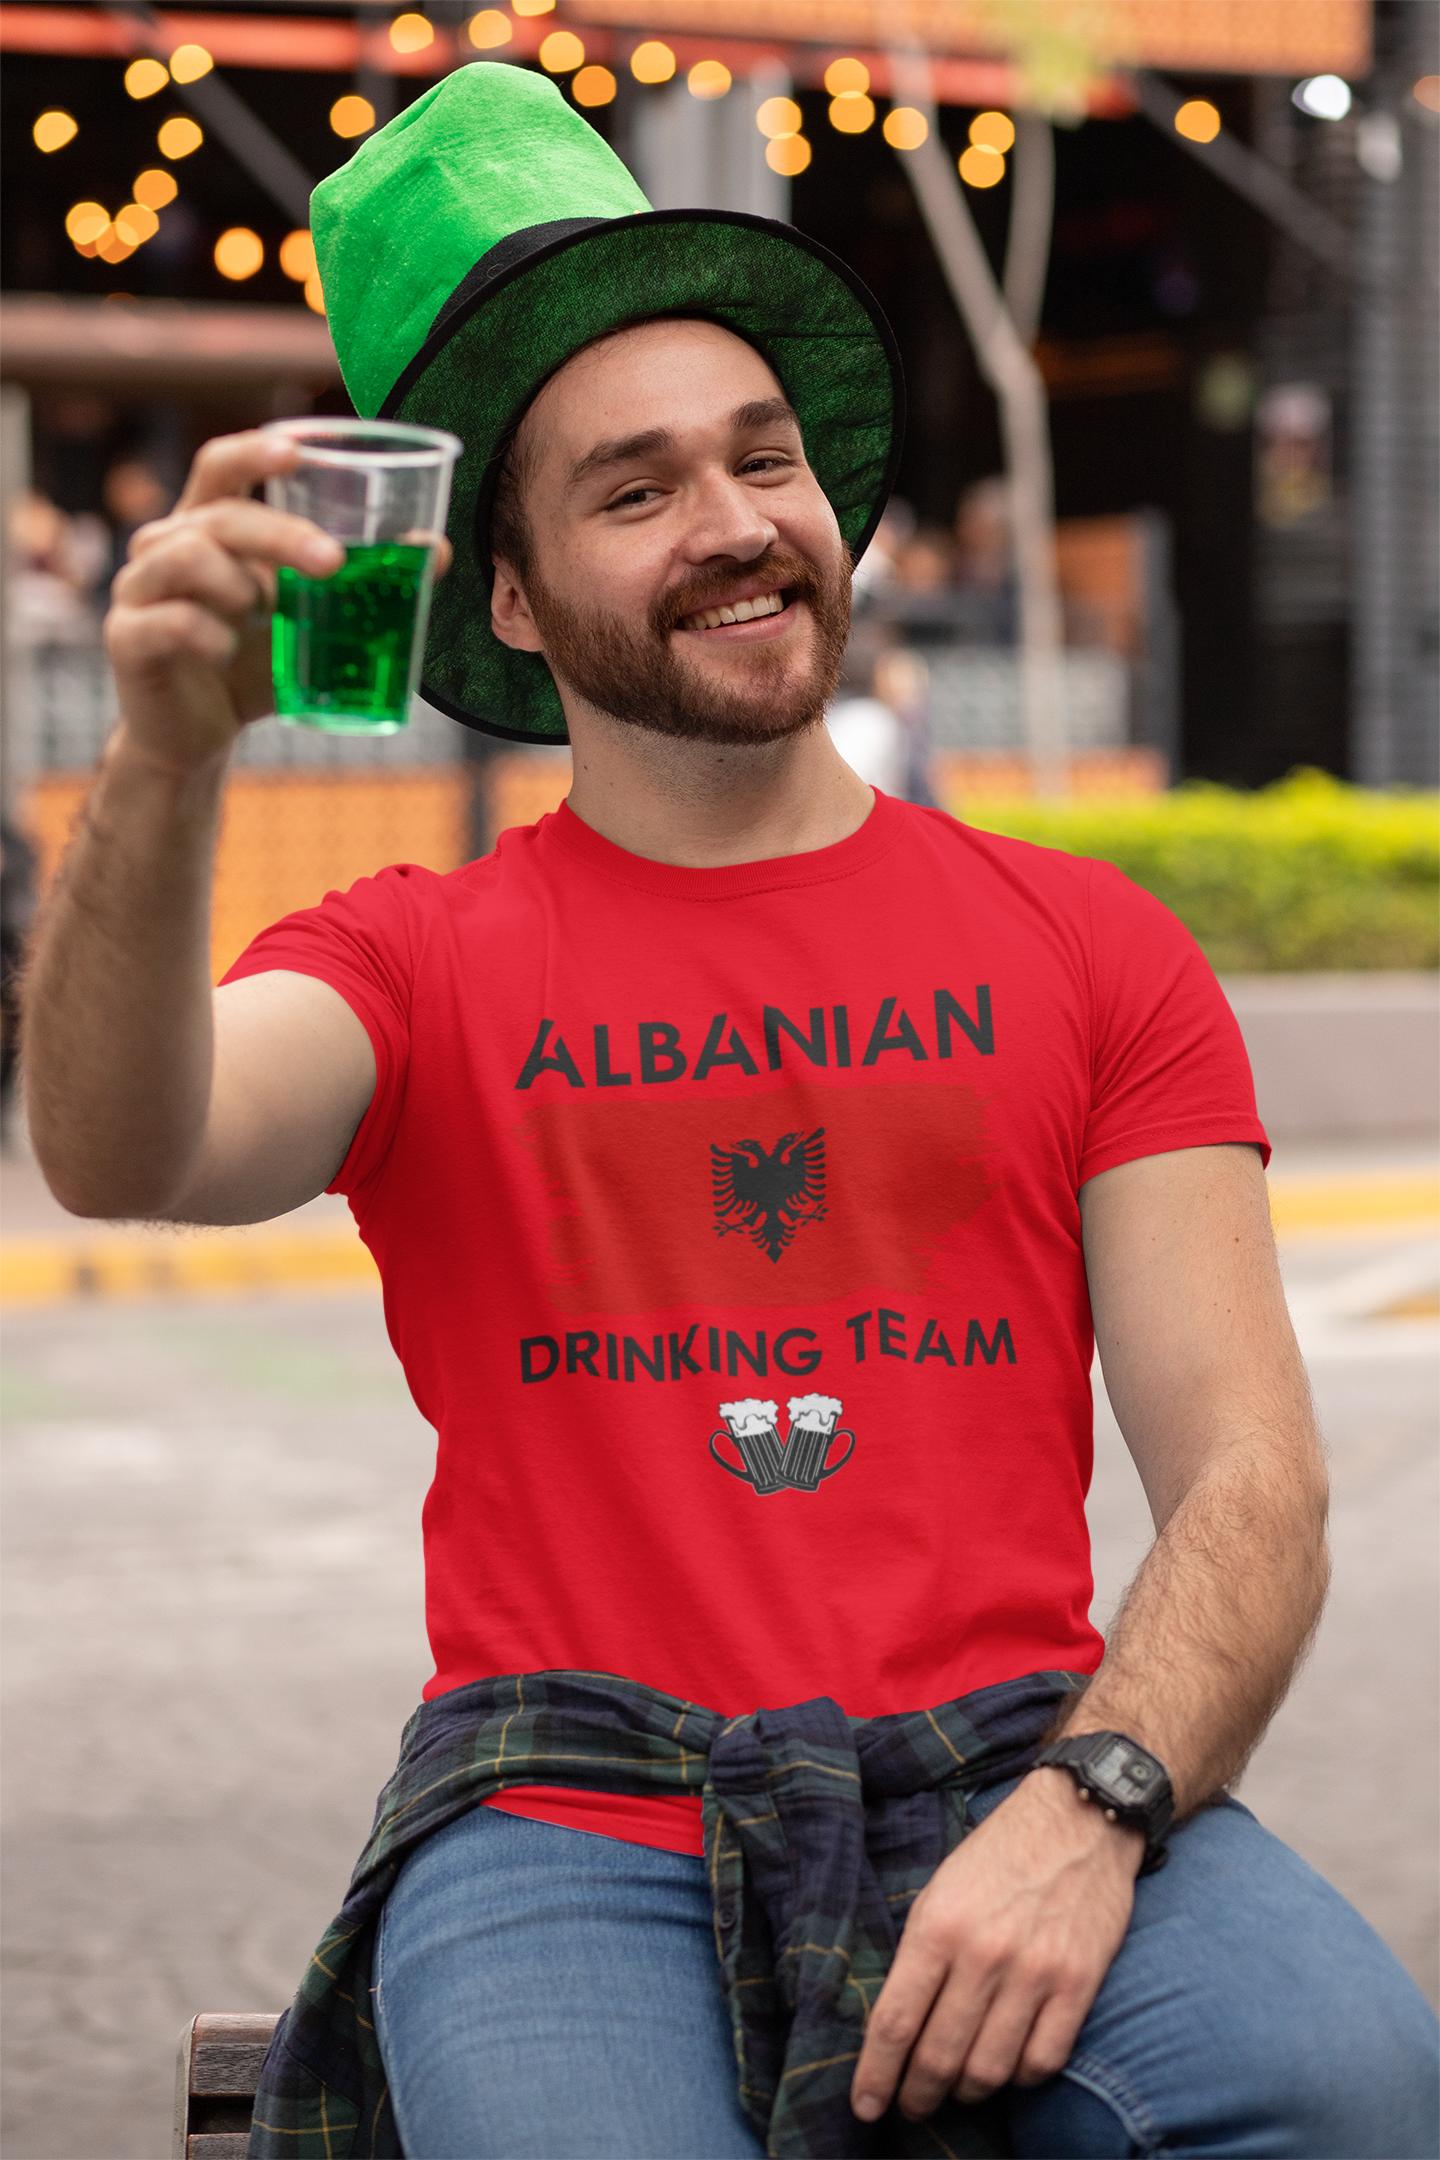 Drinking team - Red T-shirt